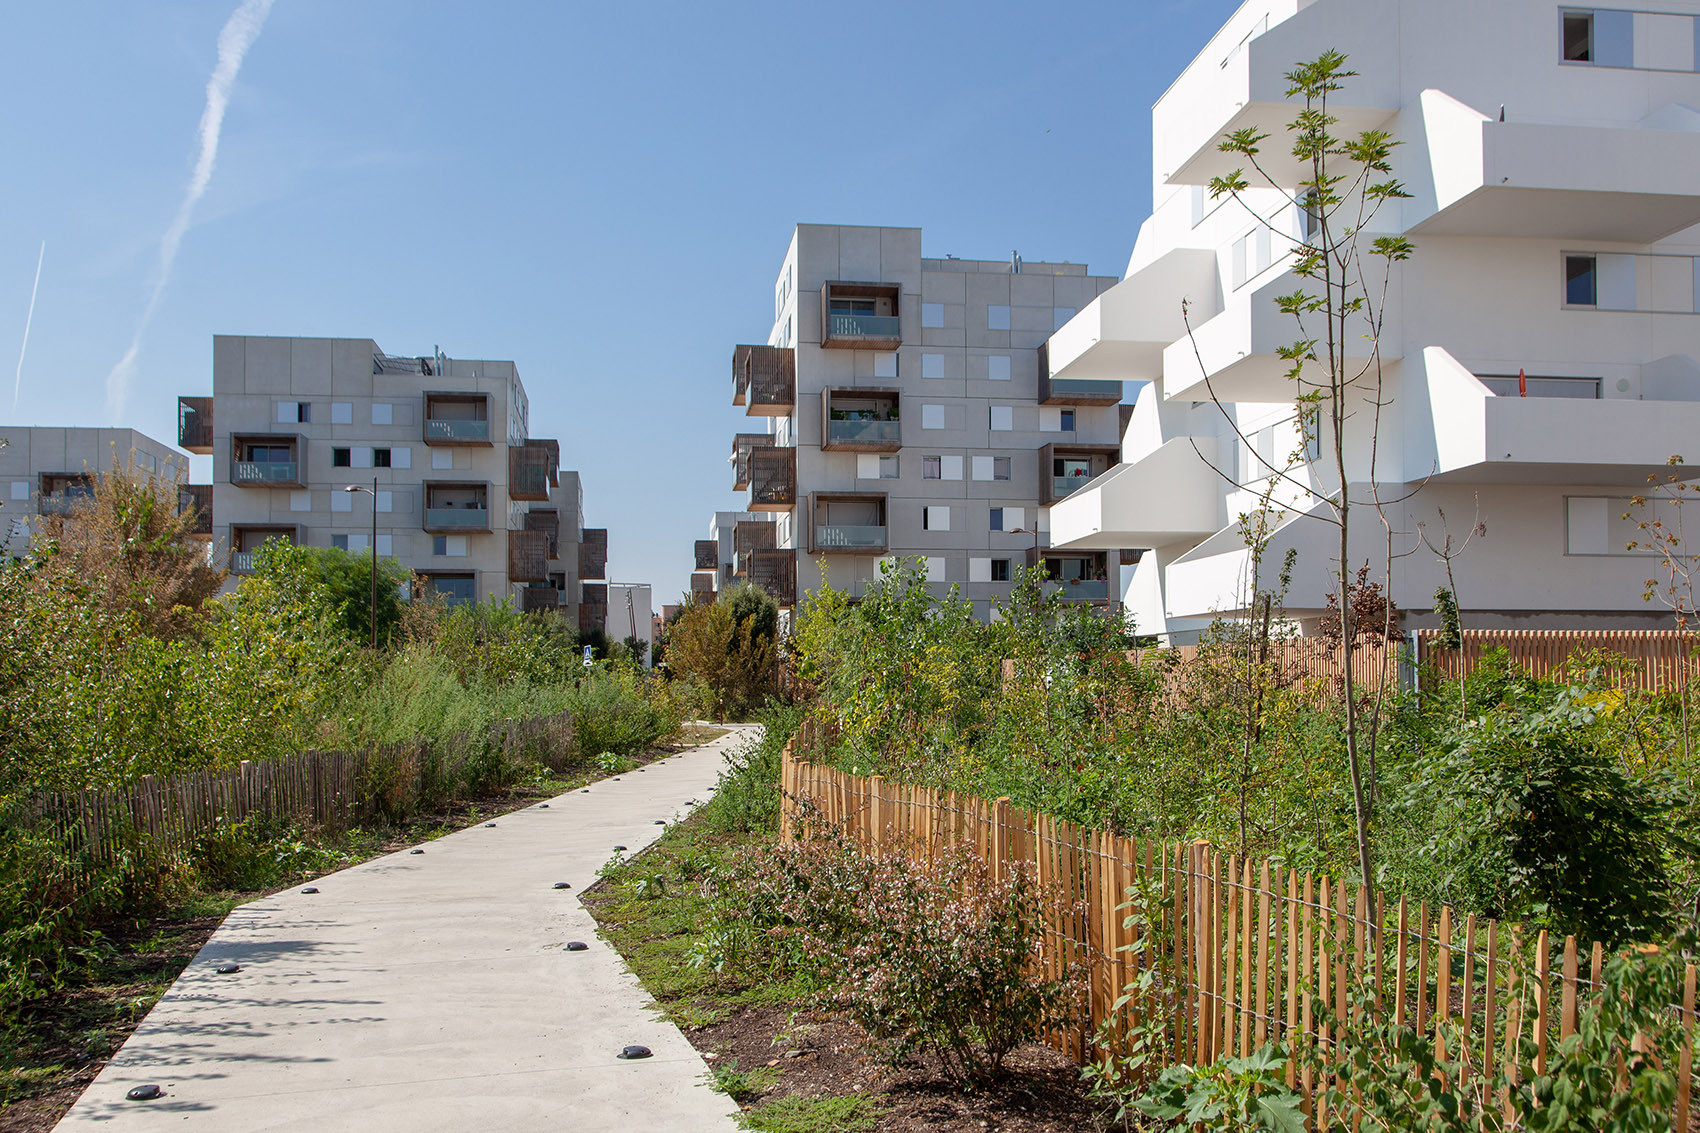 Square Maïmat住宅区更新，法国/释放公共空间，连接社区居民-60